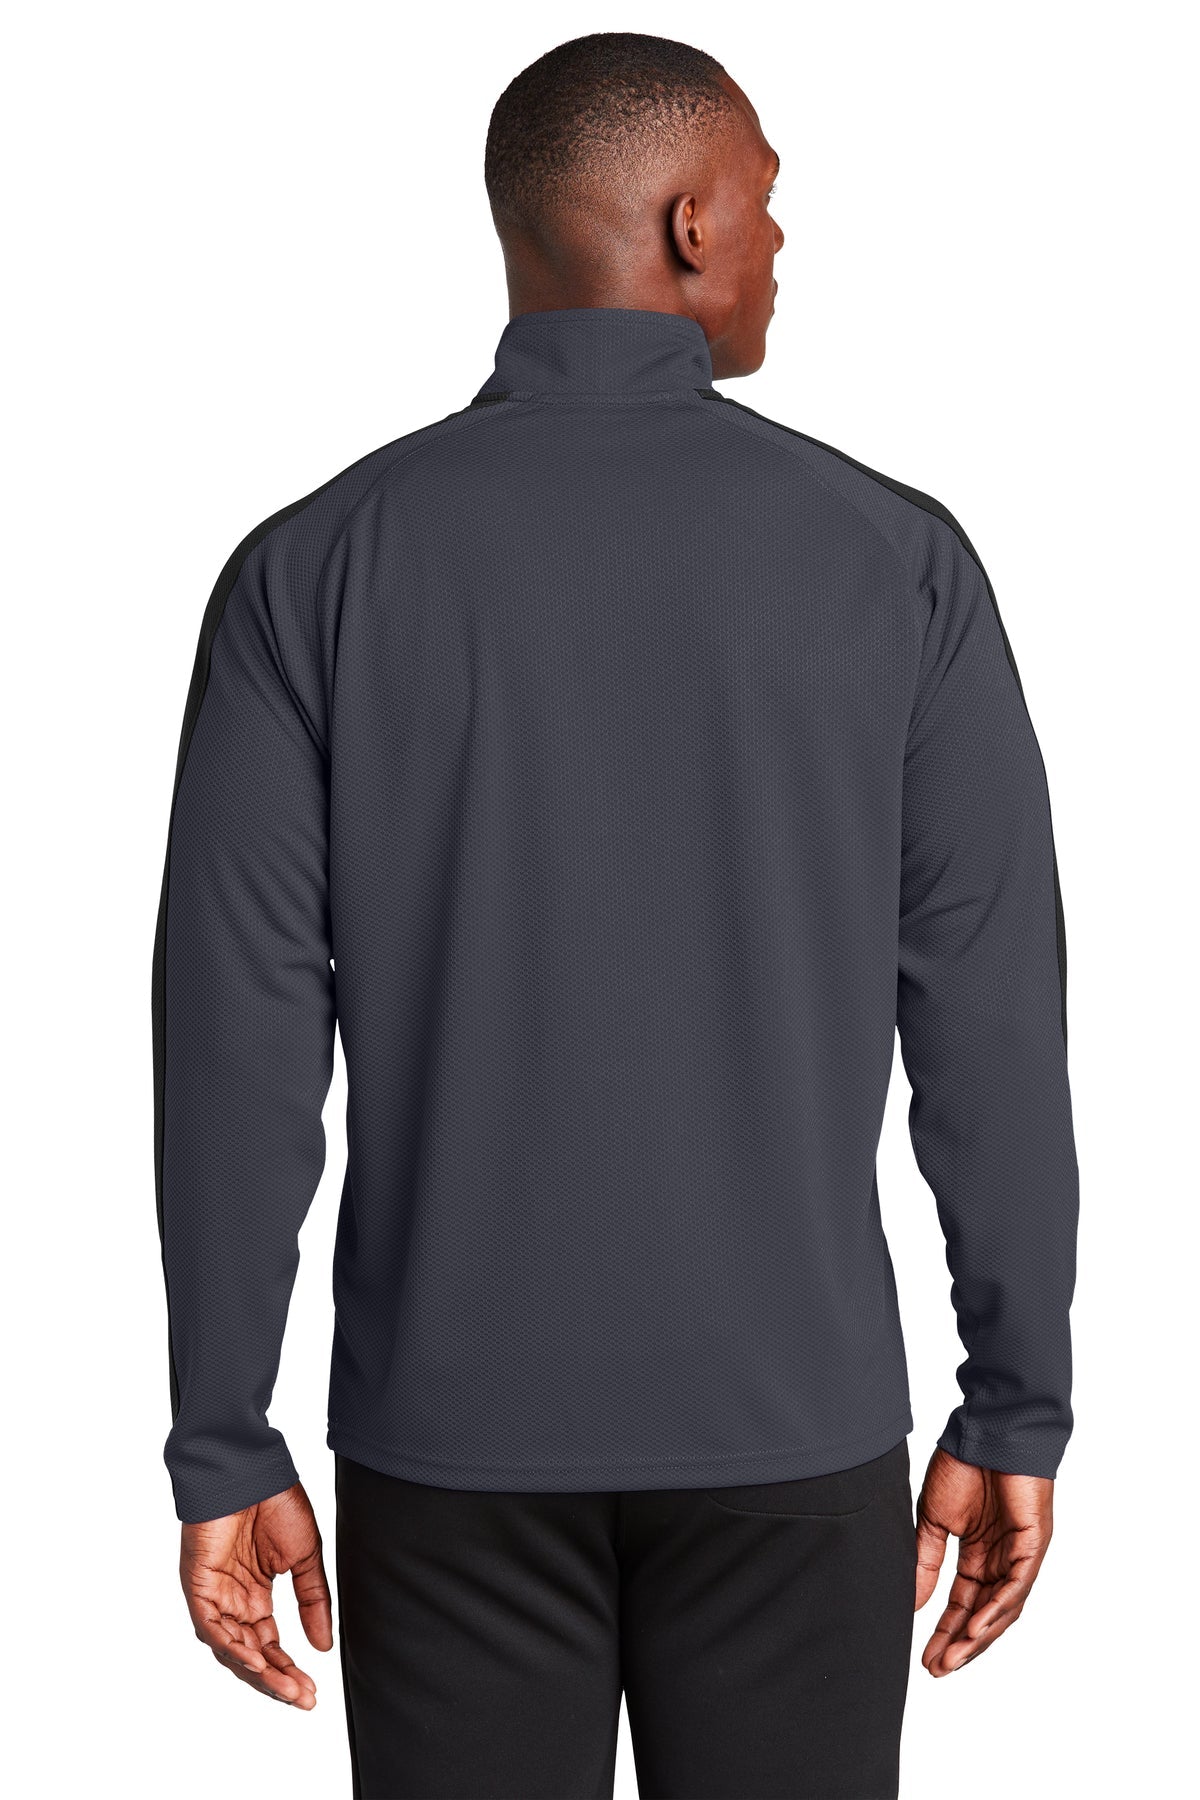 sport-tek_st861 _iron grey/ black_company_logo_sweatshirts